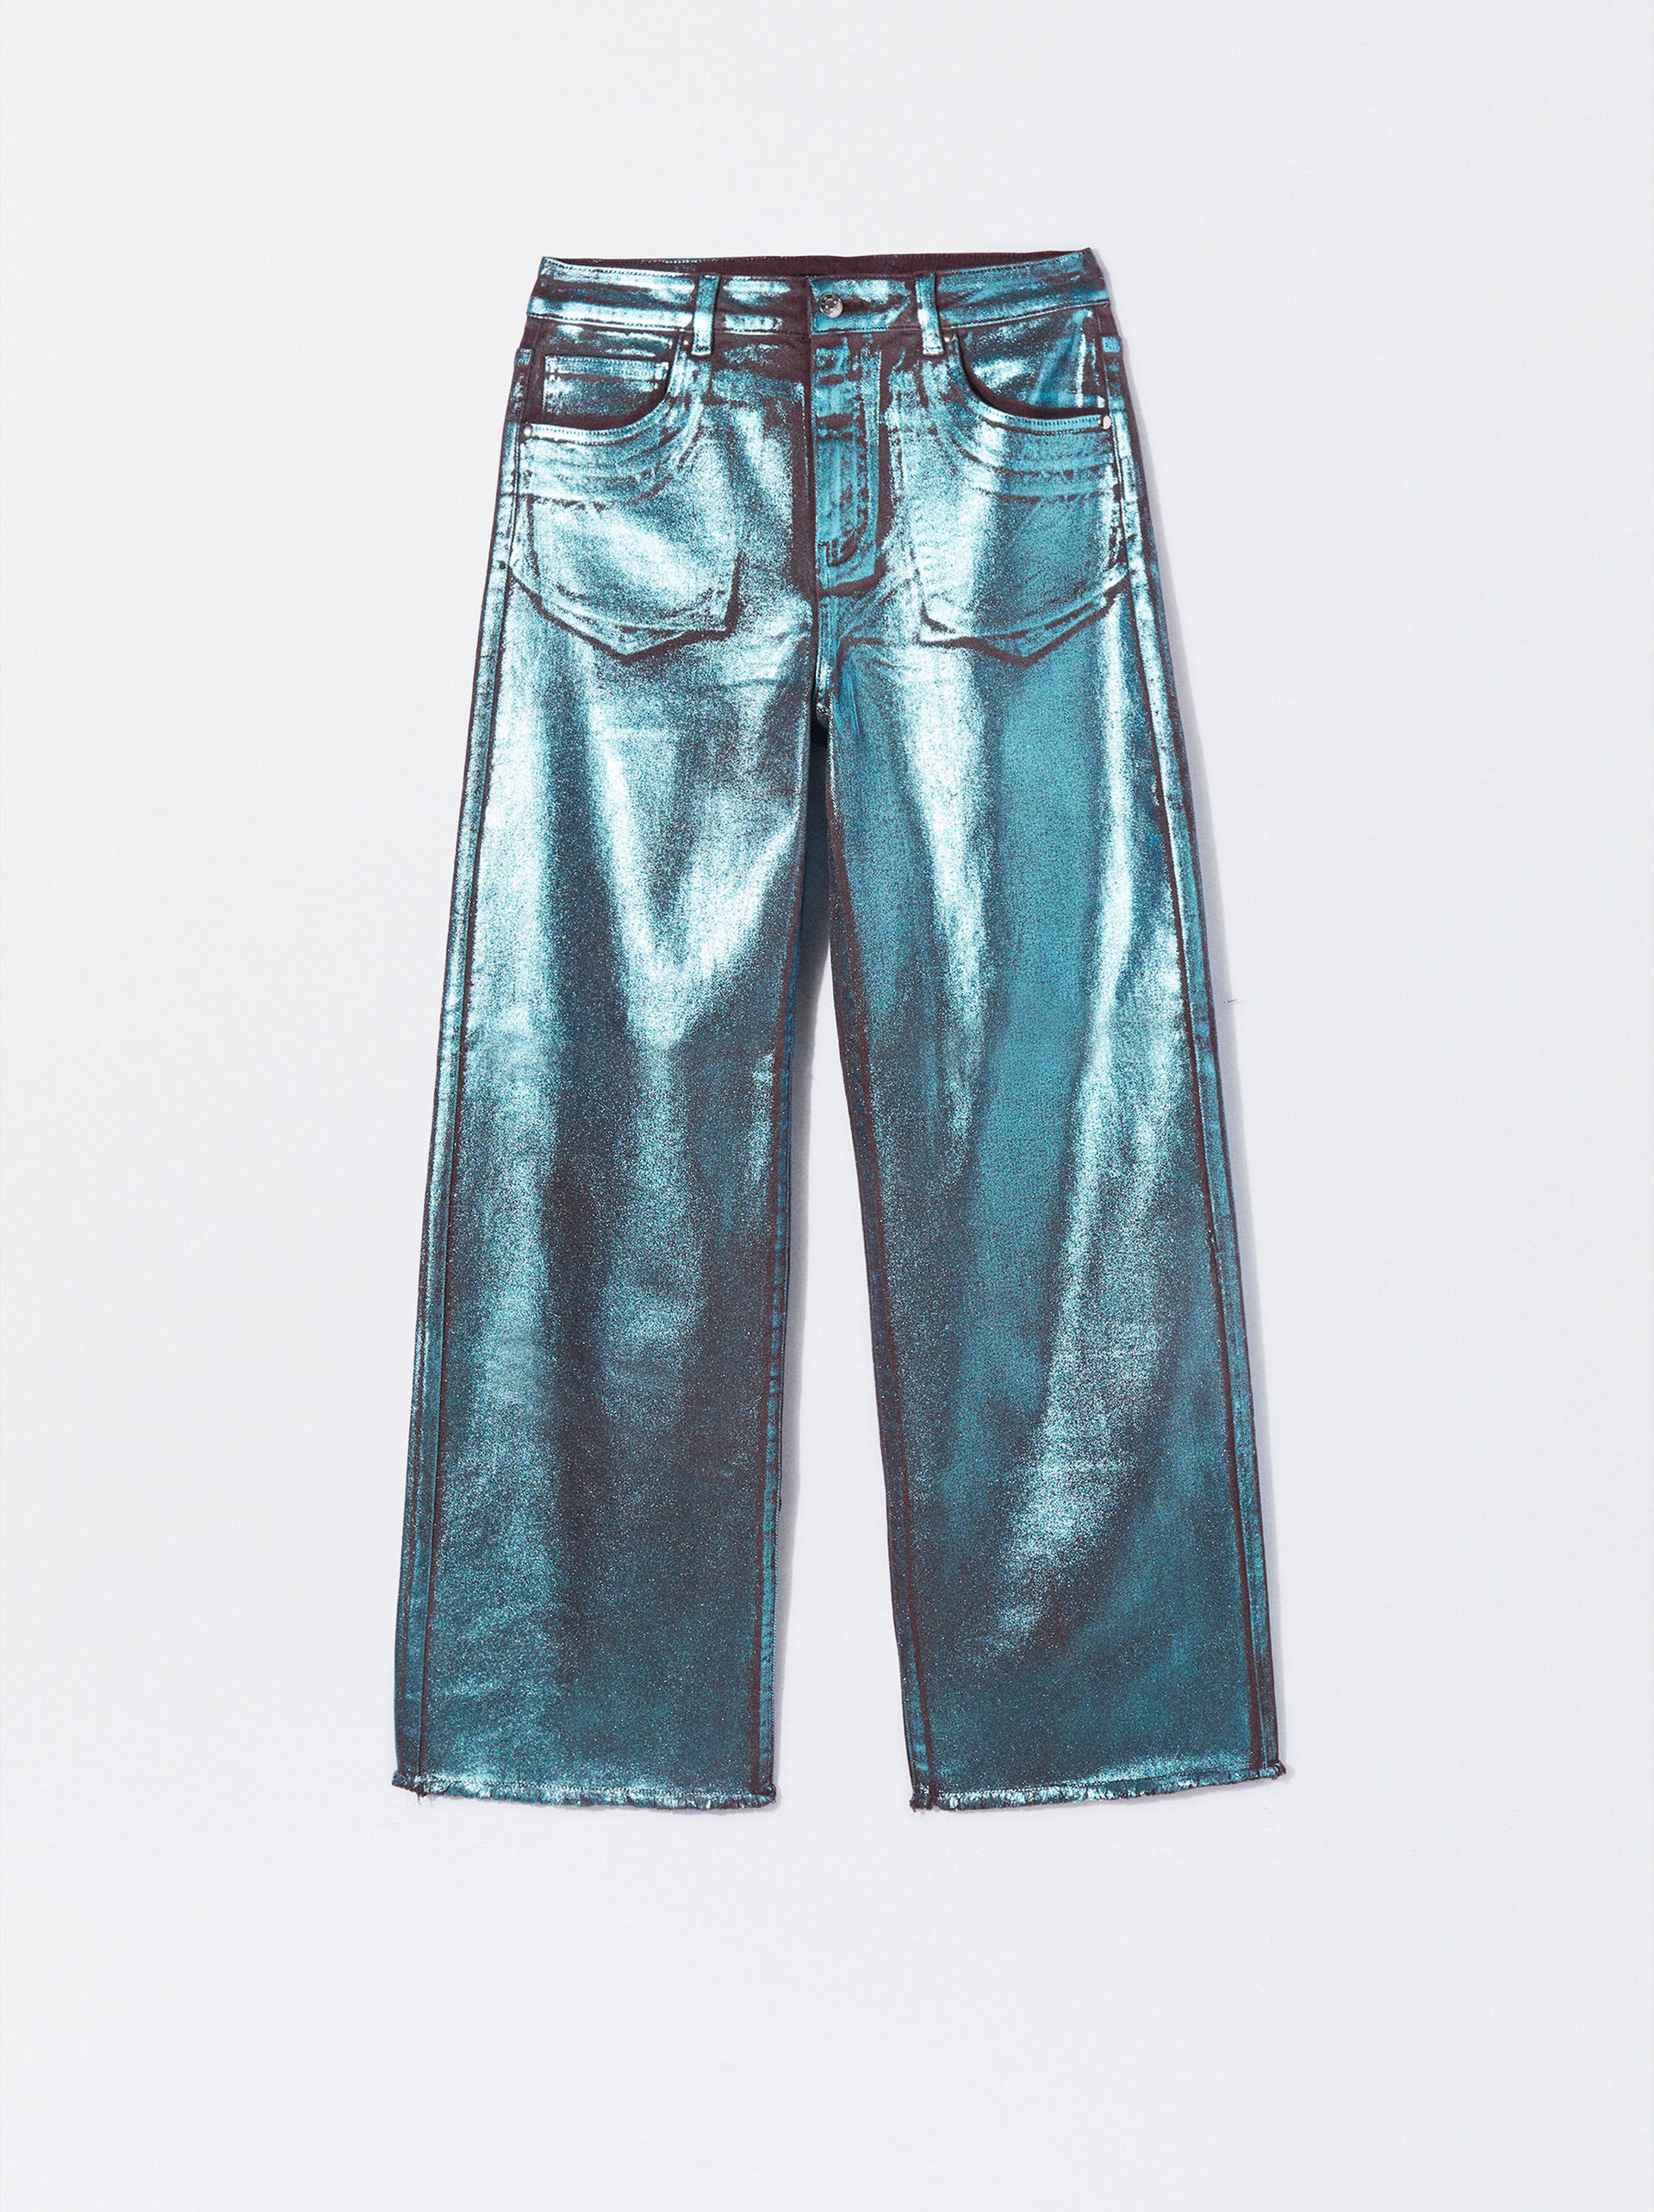 Jeans In Metallic-Optik image number 0.0